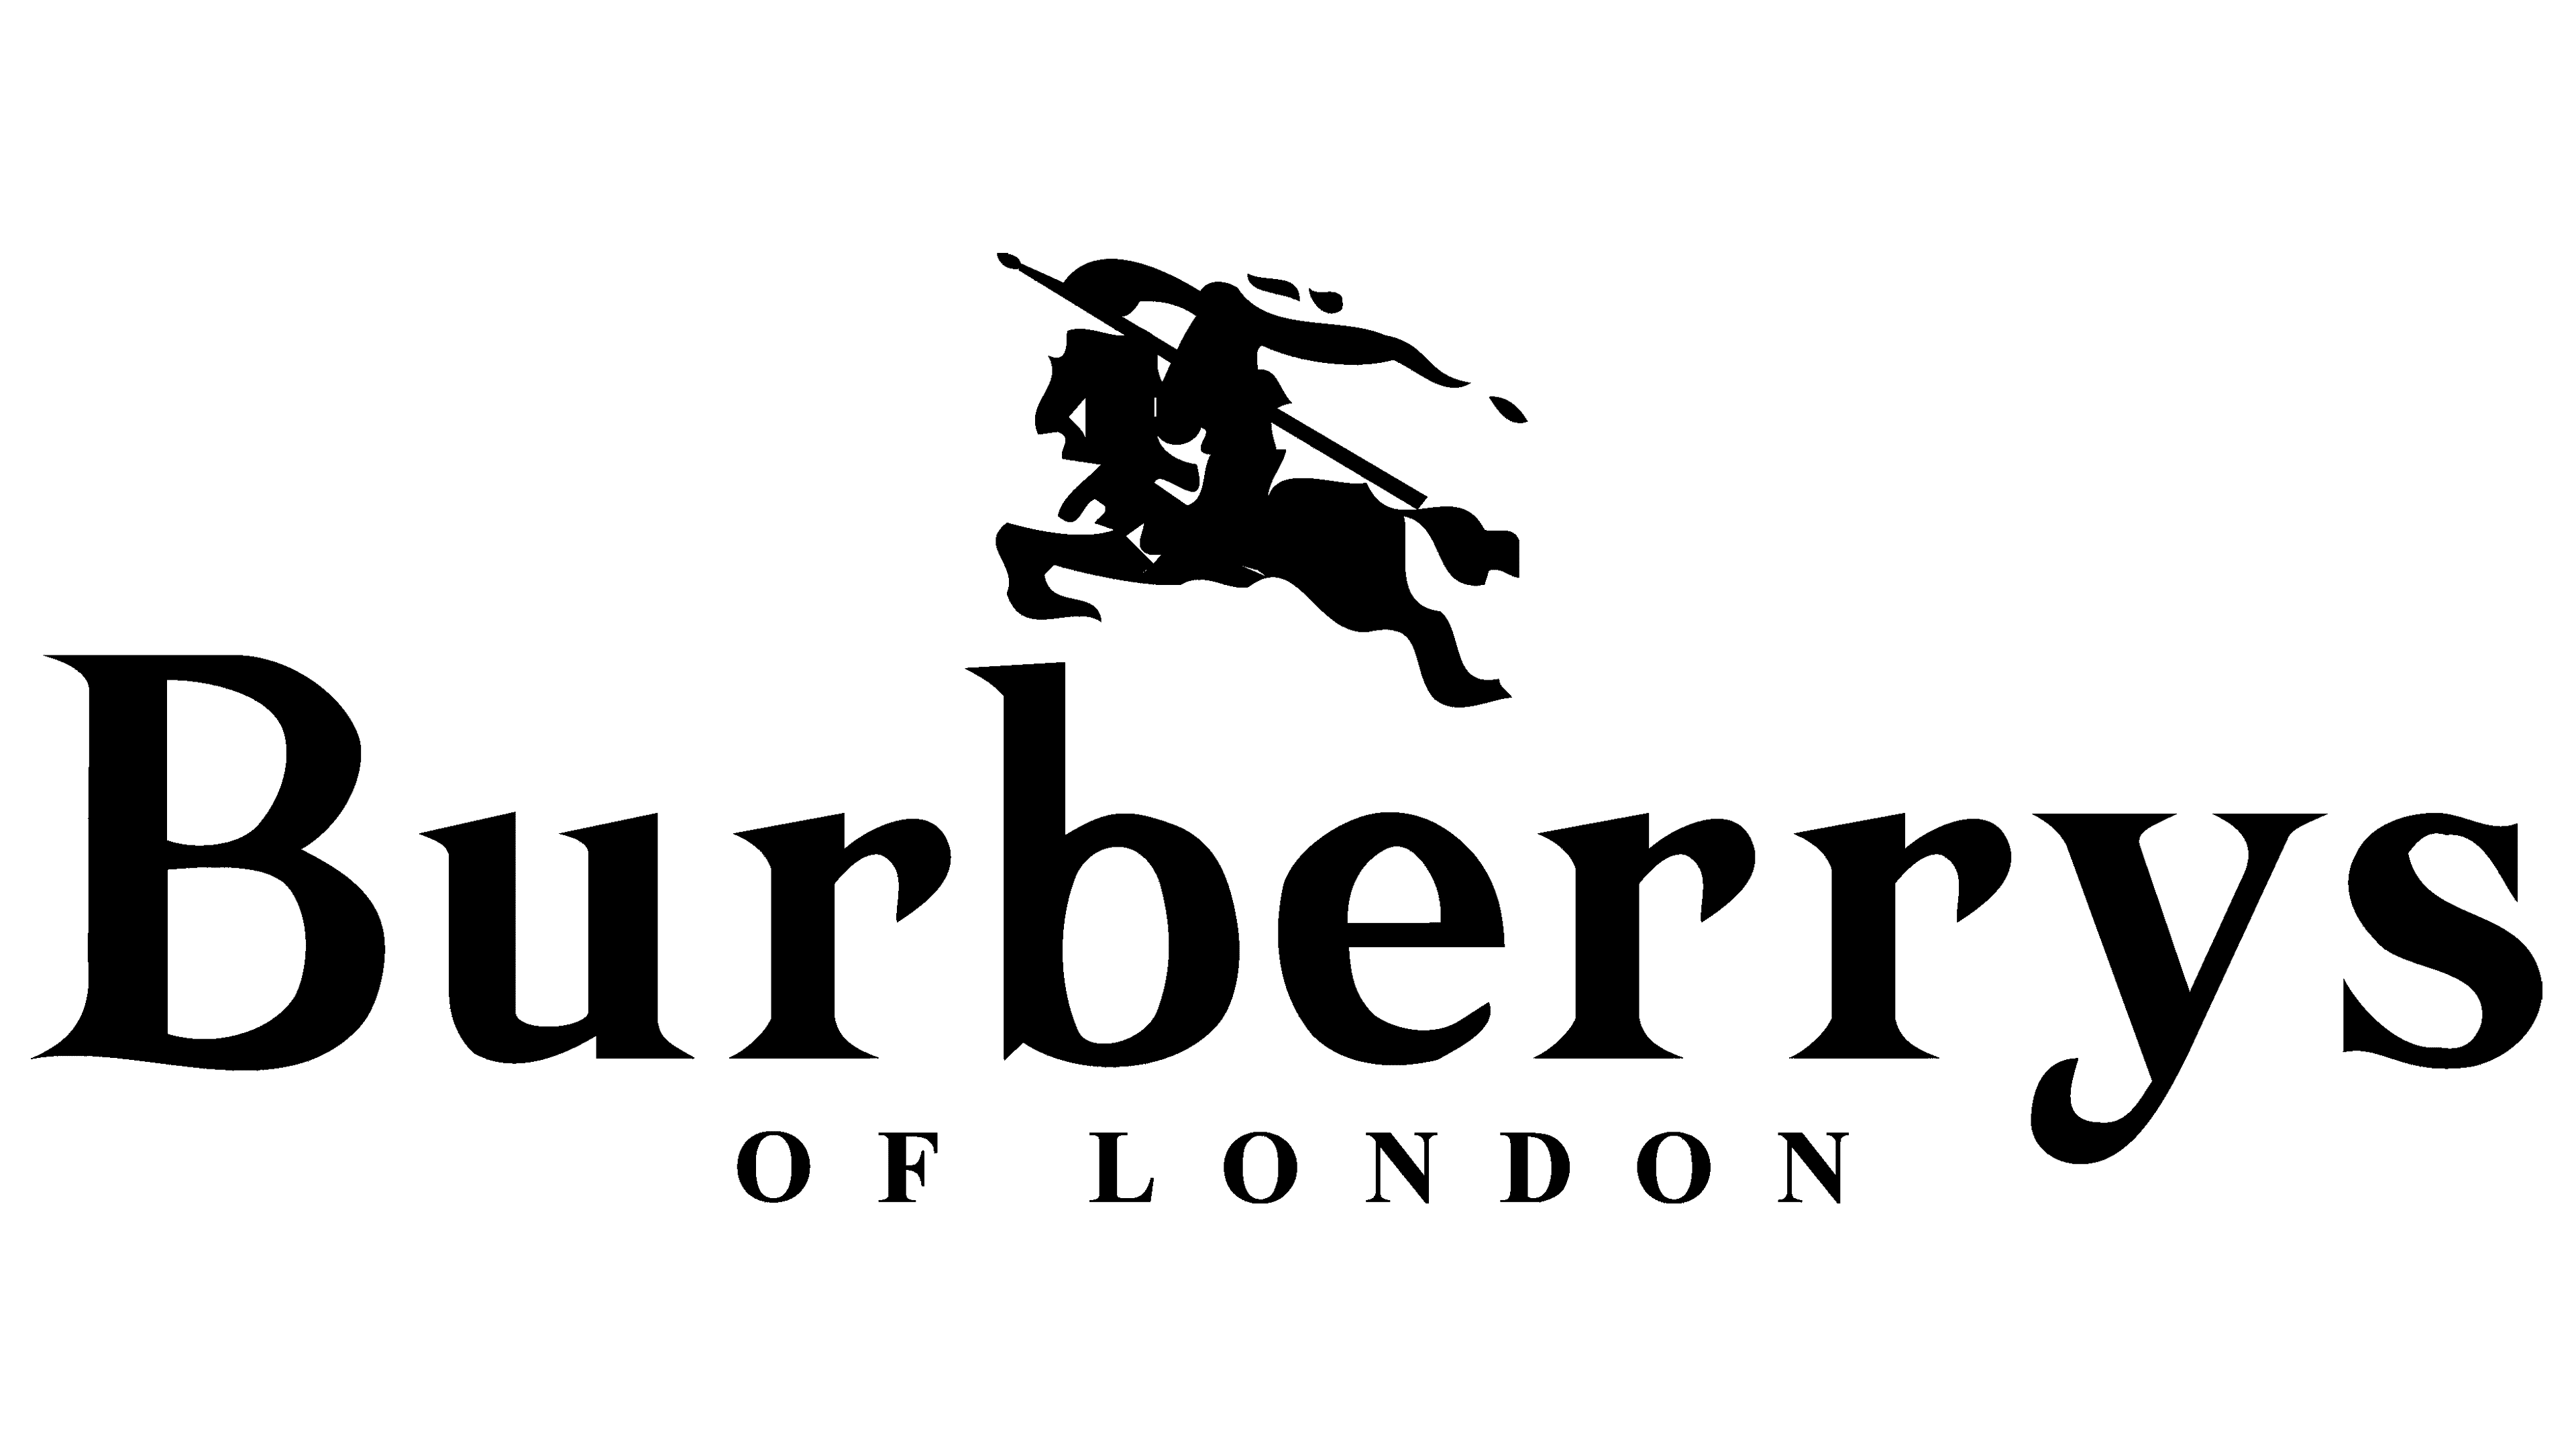 Burberrys logo